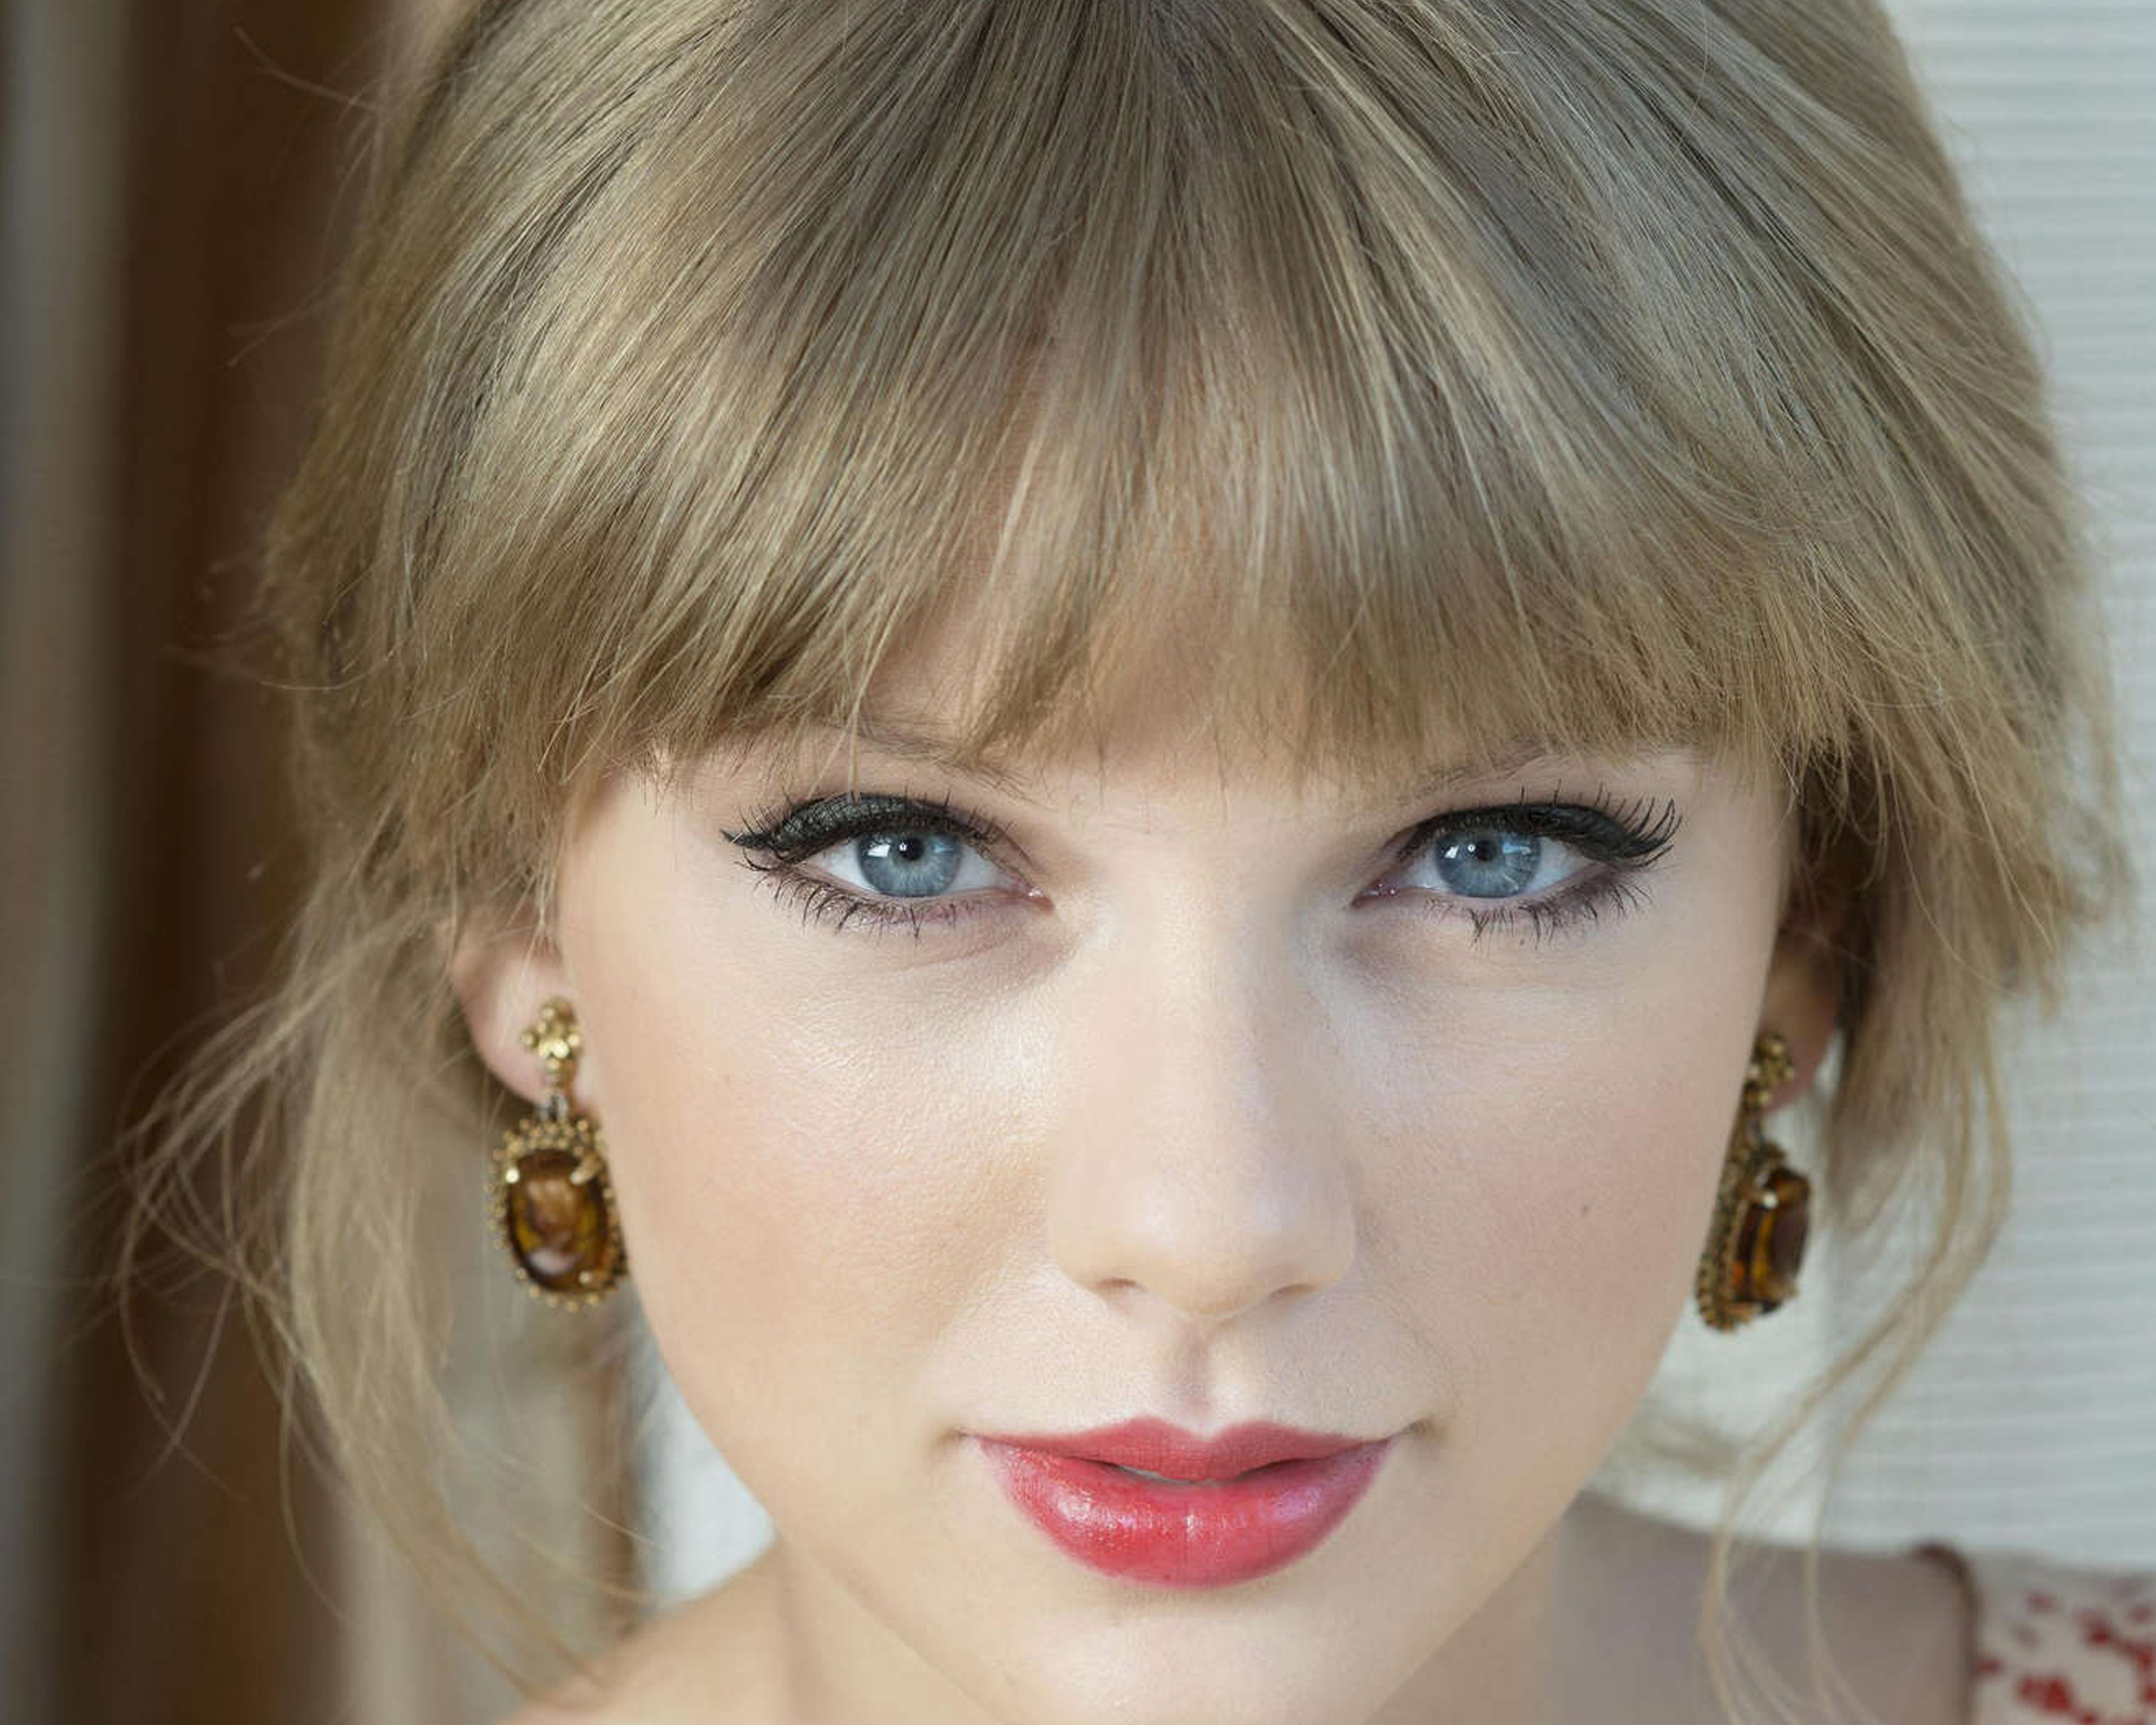 Descarga gratuita de fondo de pantalla para móvil de Música, Taylor Swift.